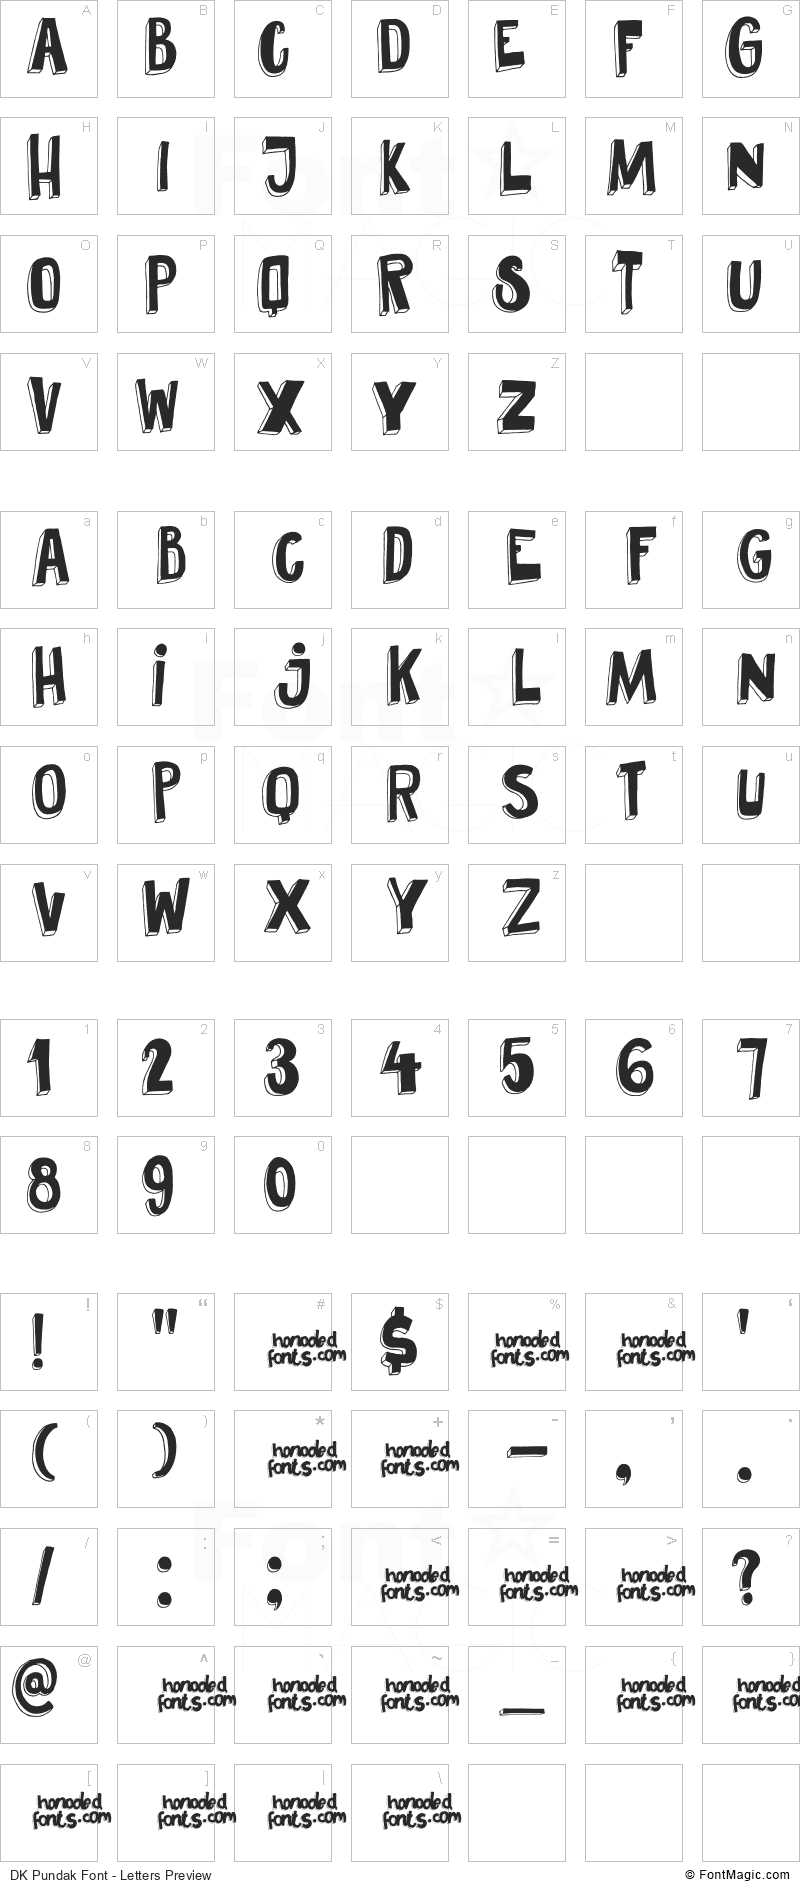 DK Pundak Font - All Latters Preview Chart